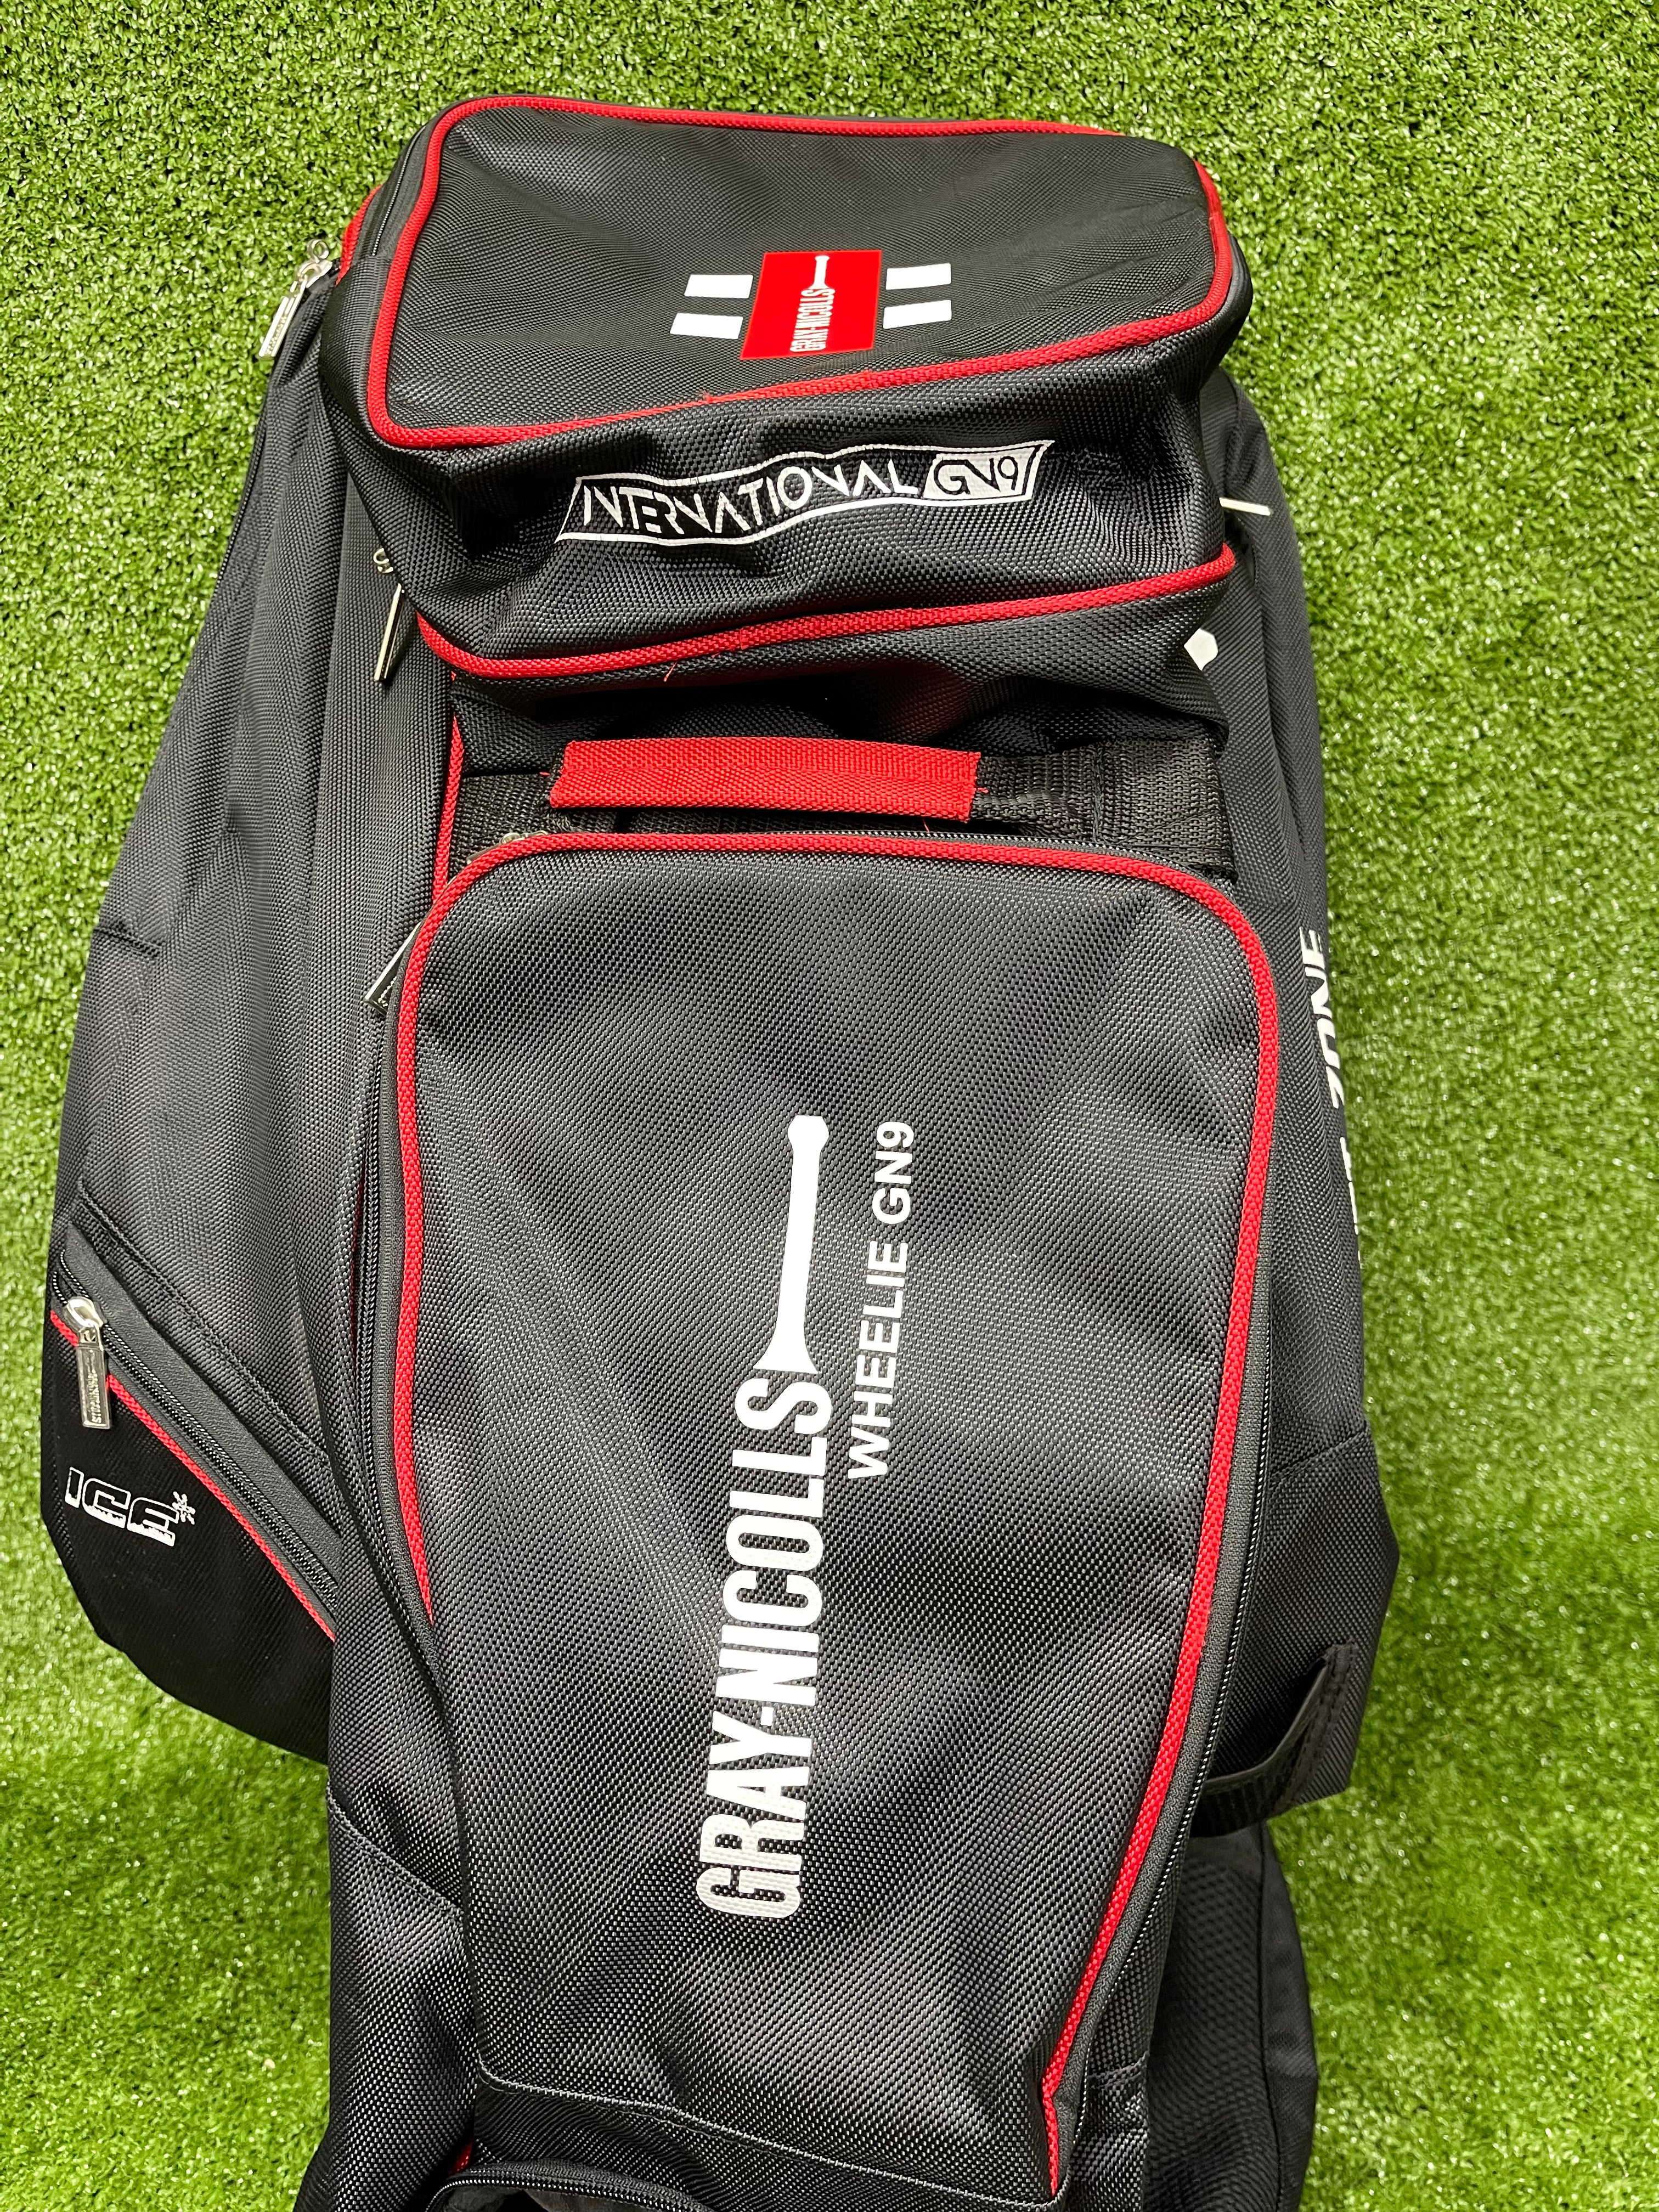 Gray-Nicolls 9 International Wheelie Cricket Kit Bag